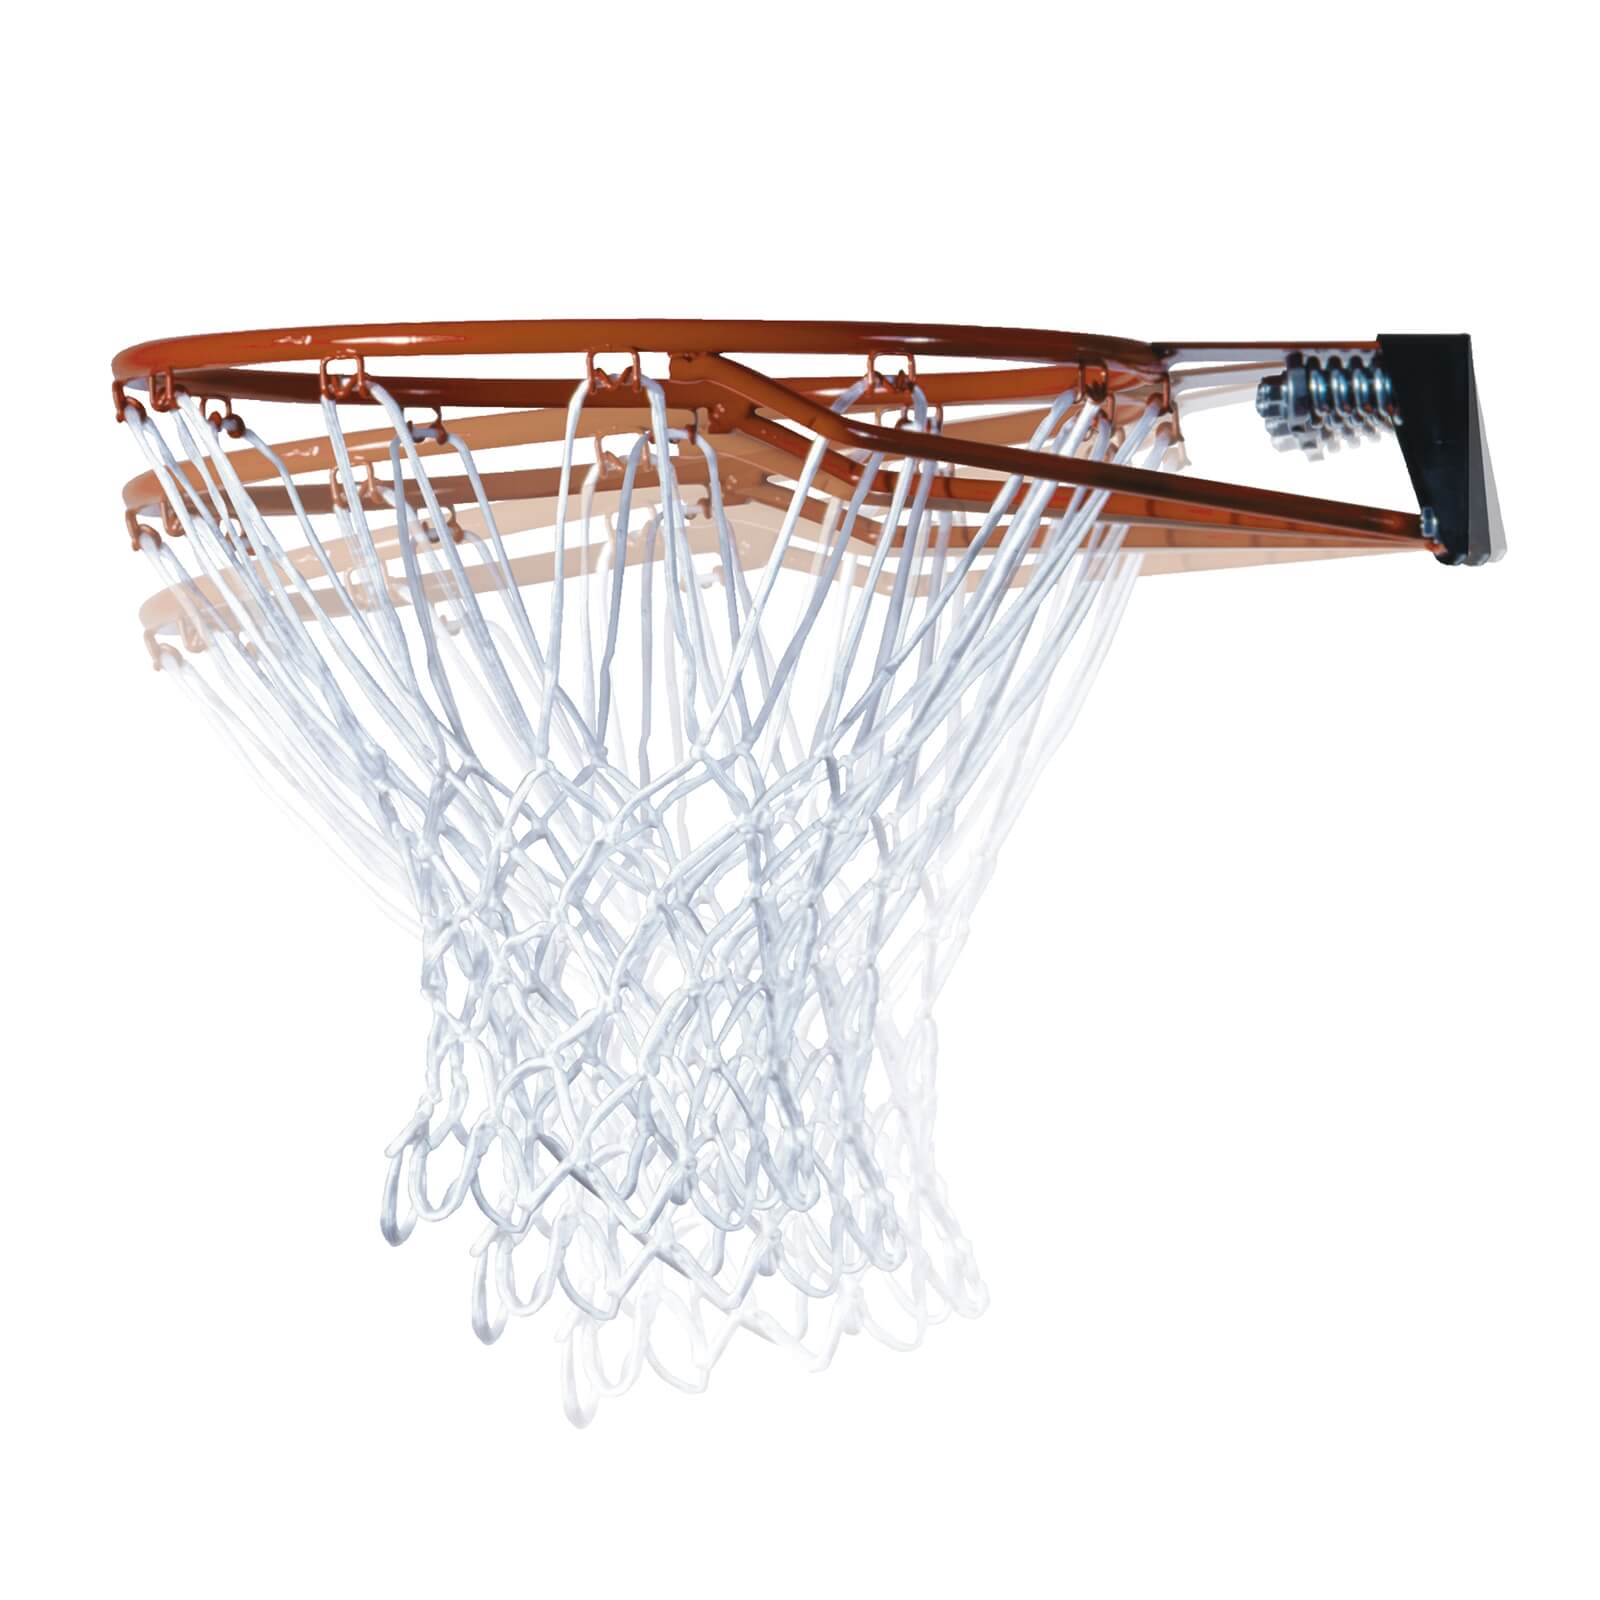 Lifetime 52 Adjustable Portable Basketball Hoop